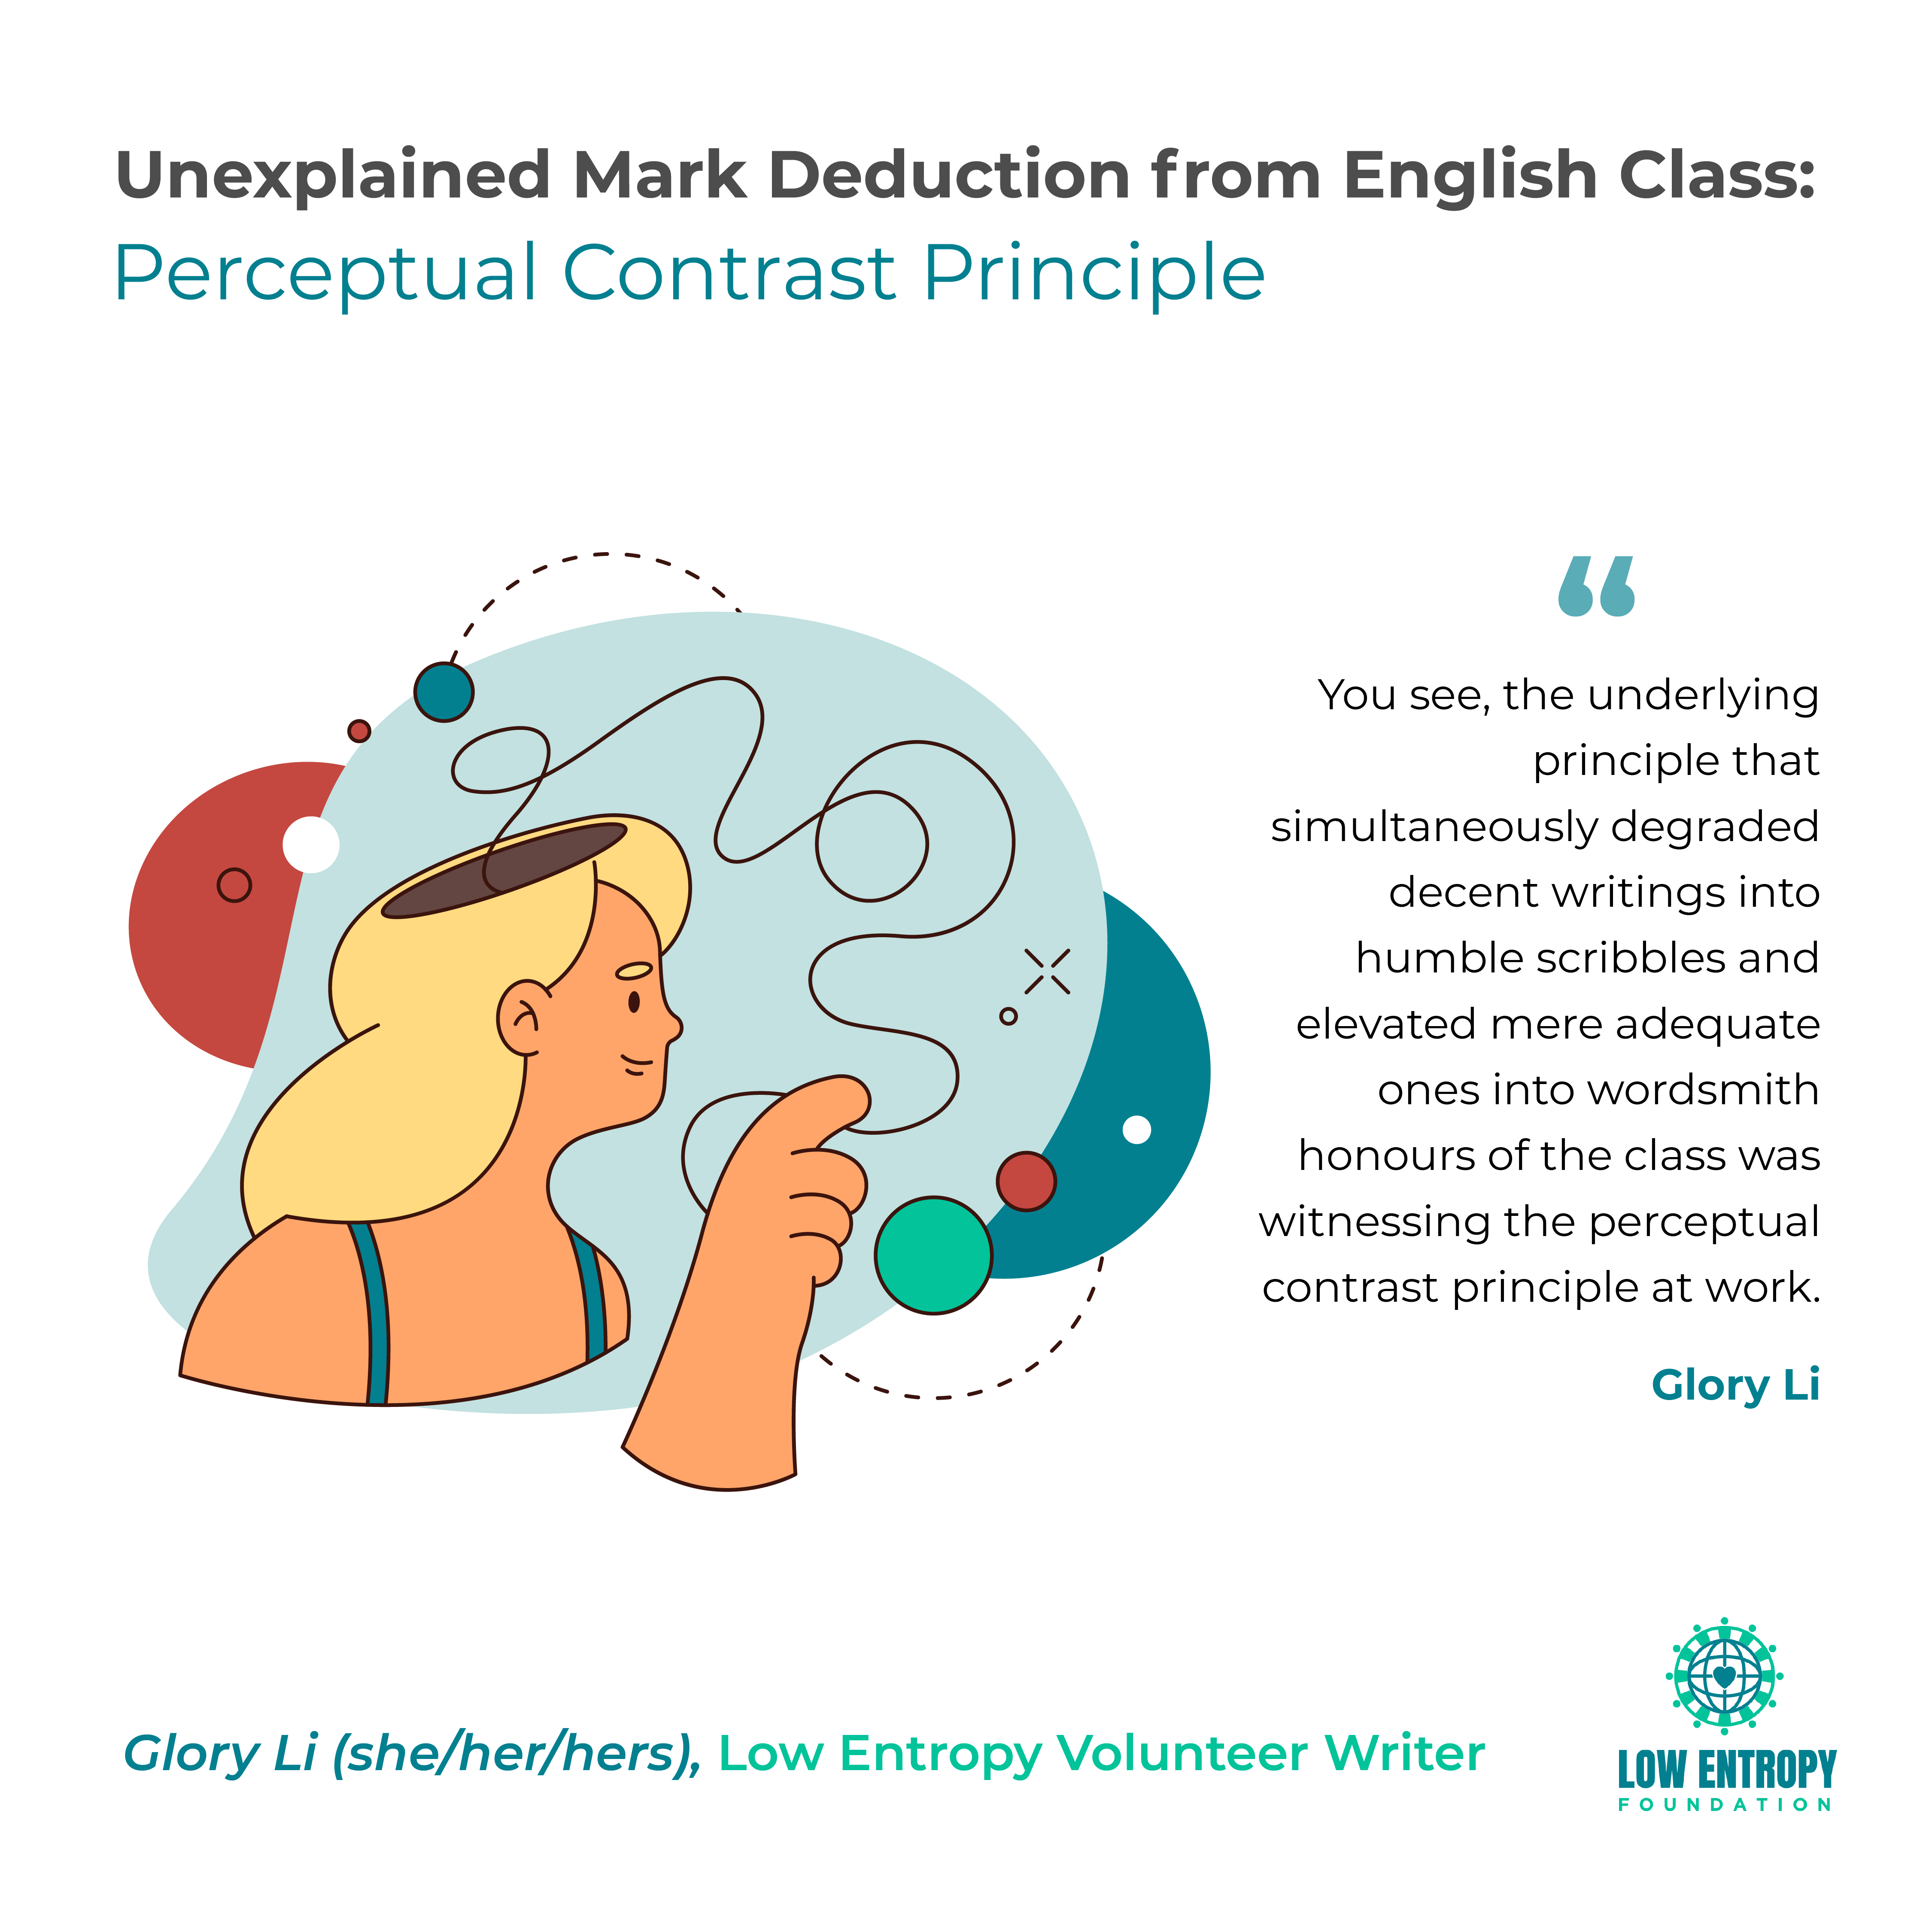 Unexplained Mark Deduction from English Class: Perceptual Contrast Principle